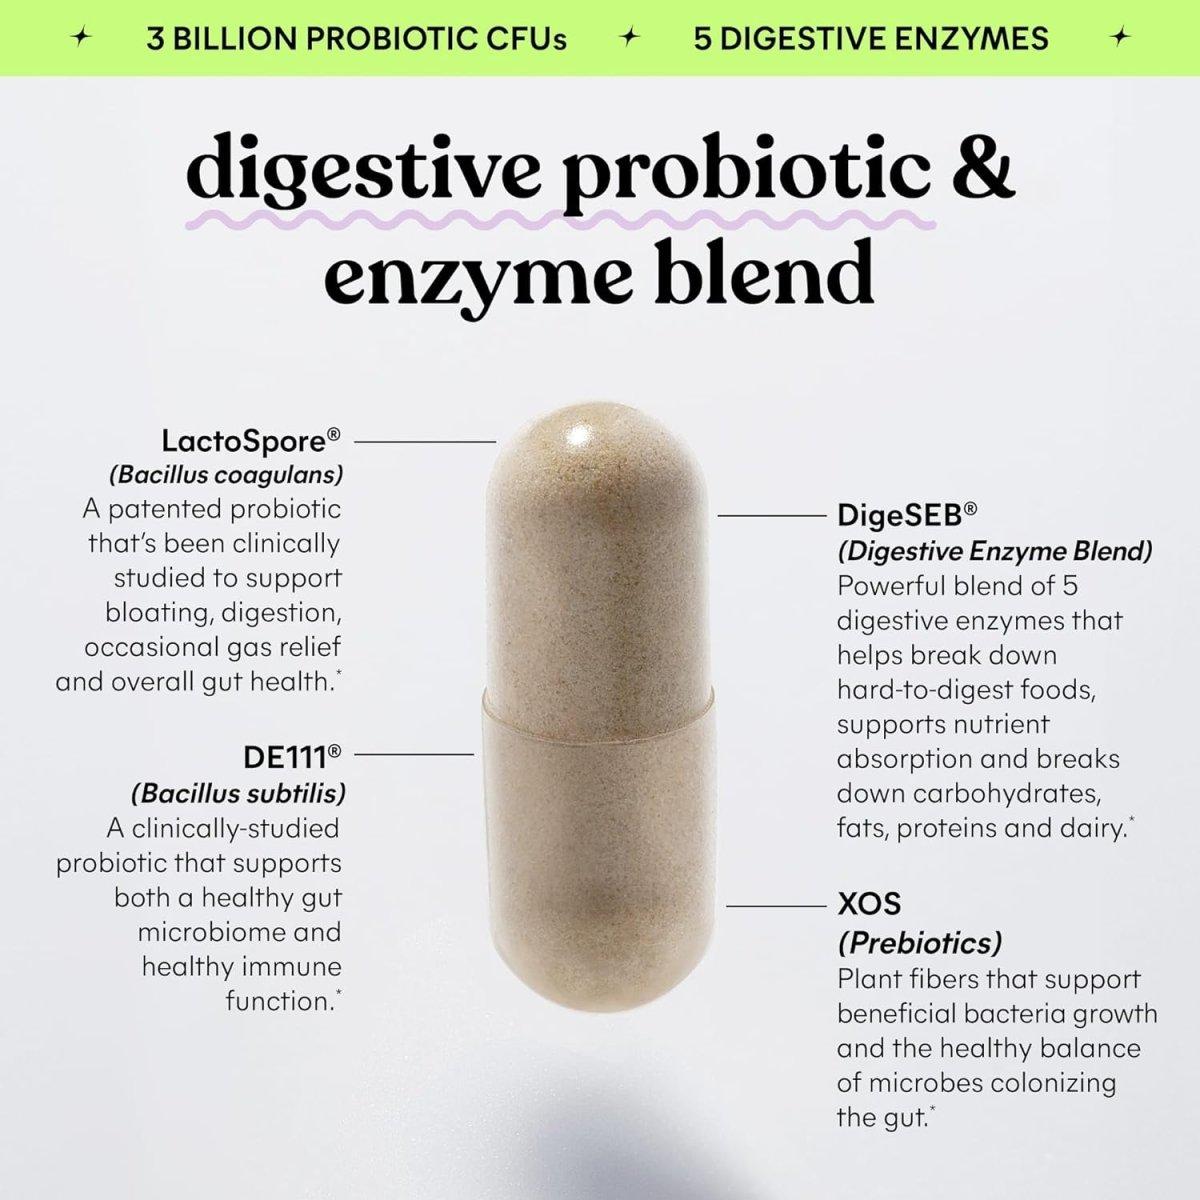 Lemme Debloat Daily Digestive Enzymes & 3-in-1 Prebiotic - 60 Ct - Glam Global UK